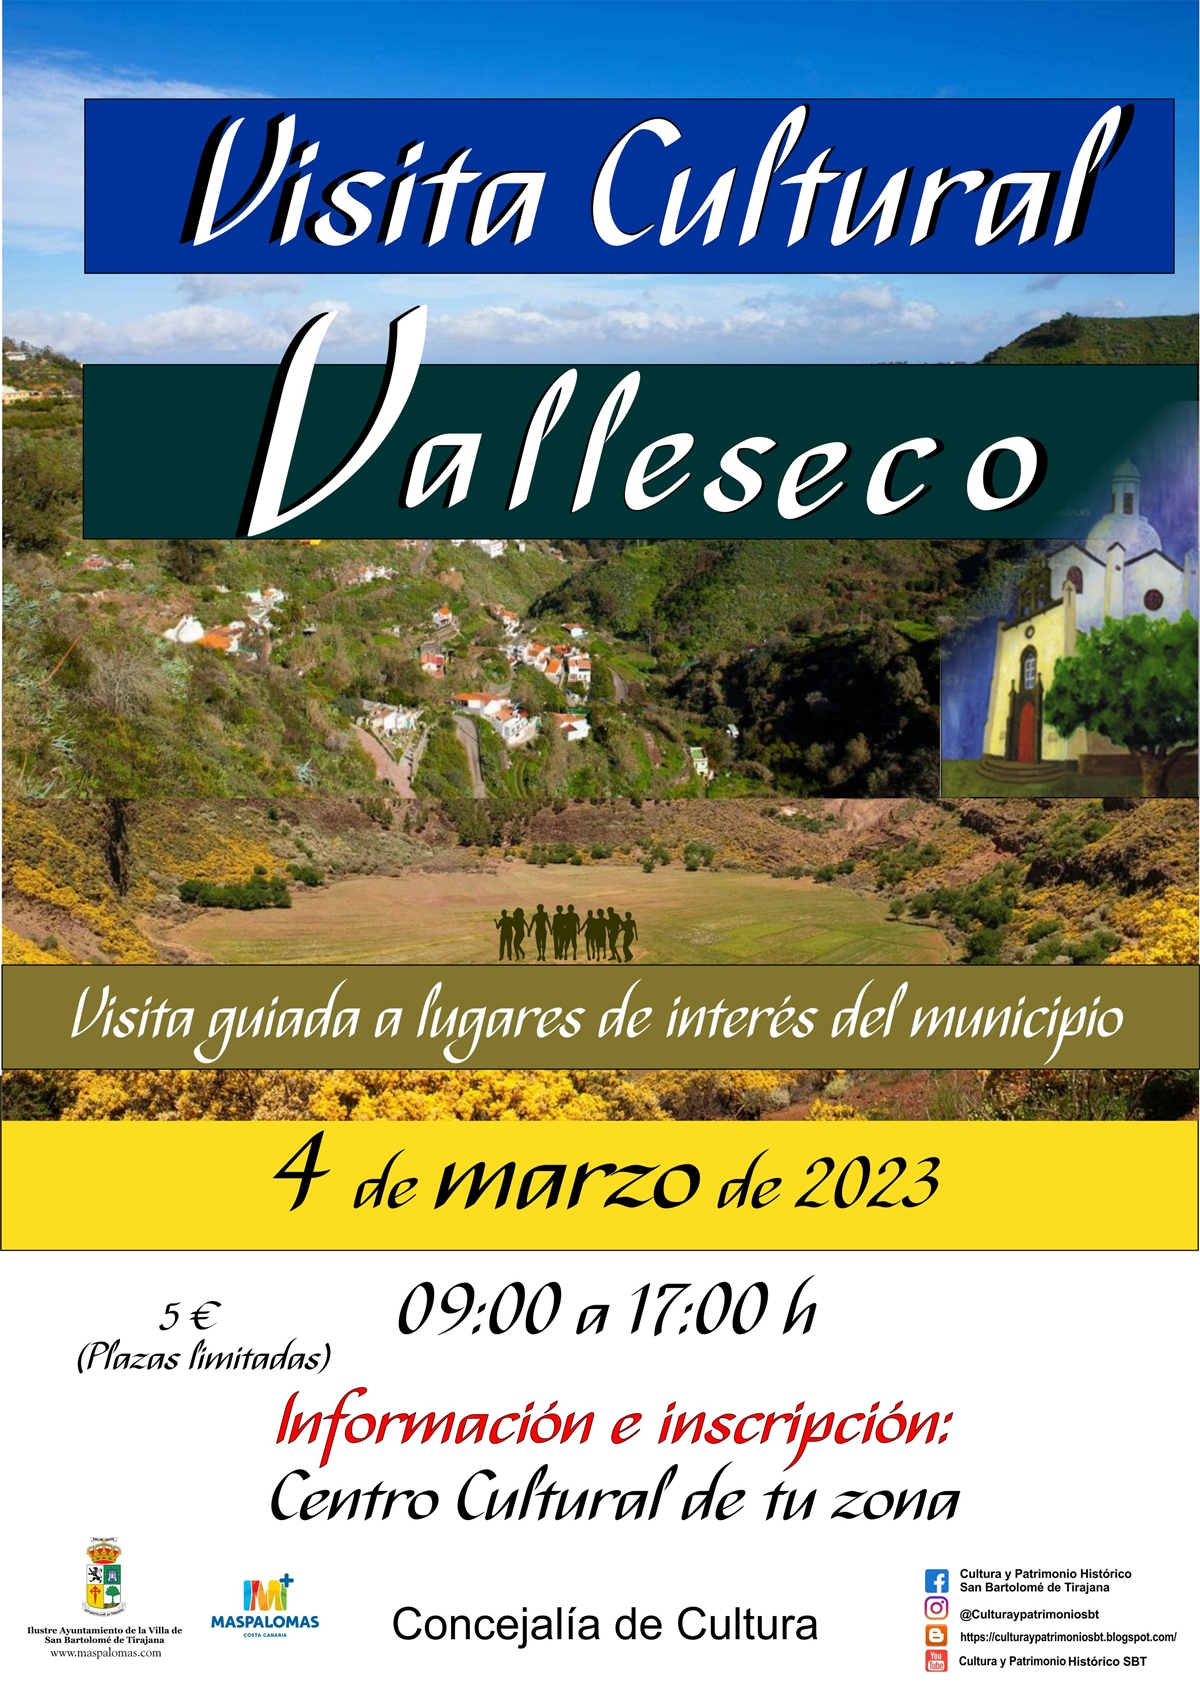 Visita Cultural - Valleseco